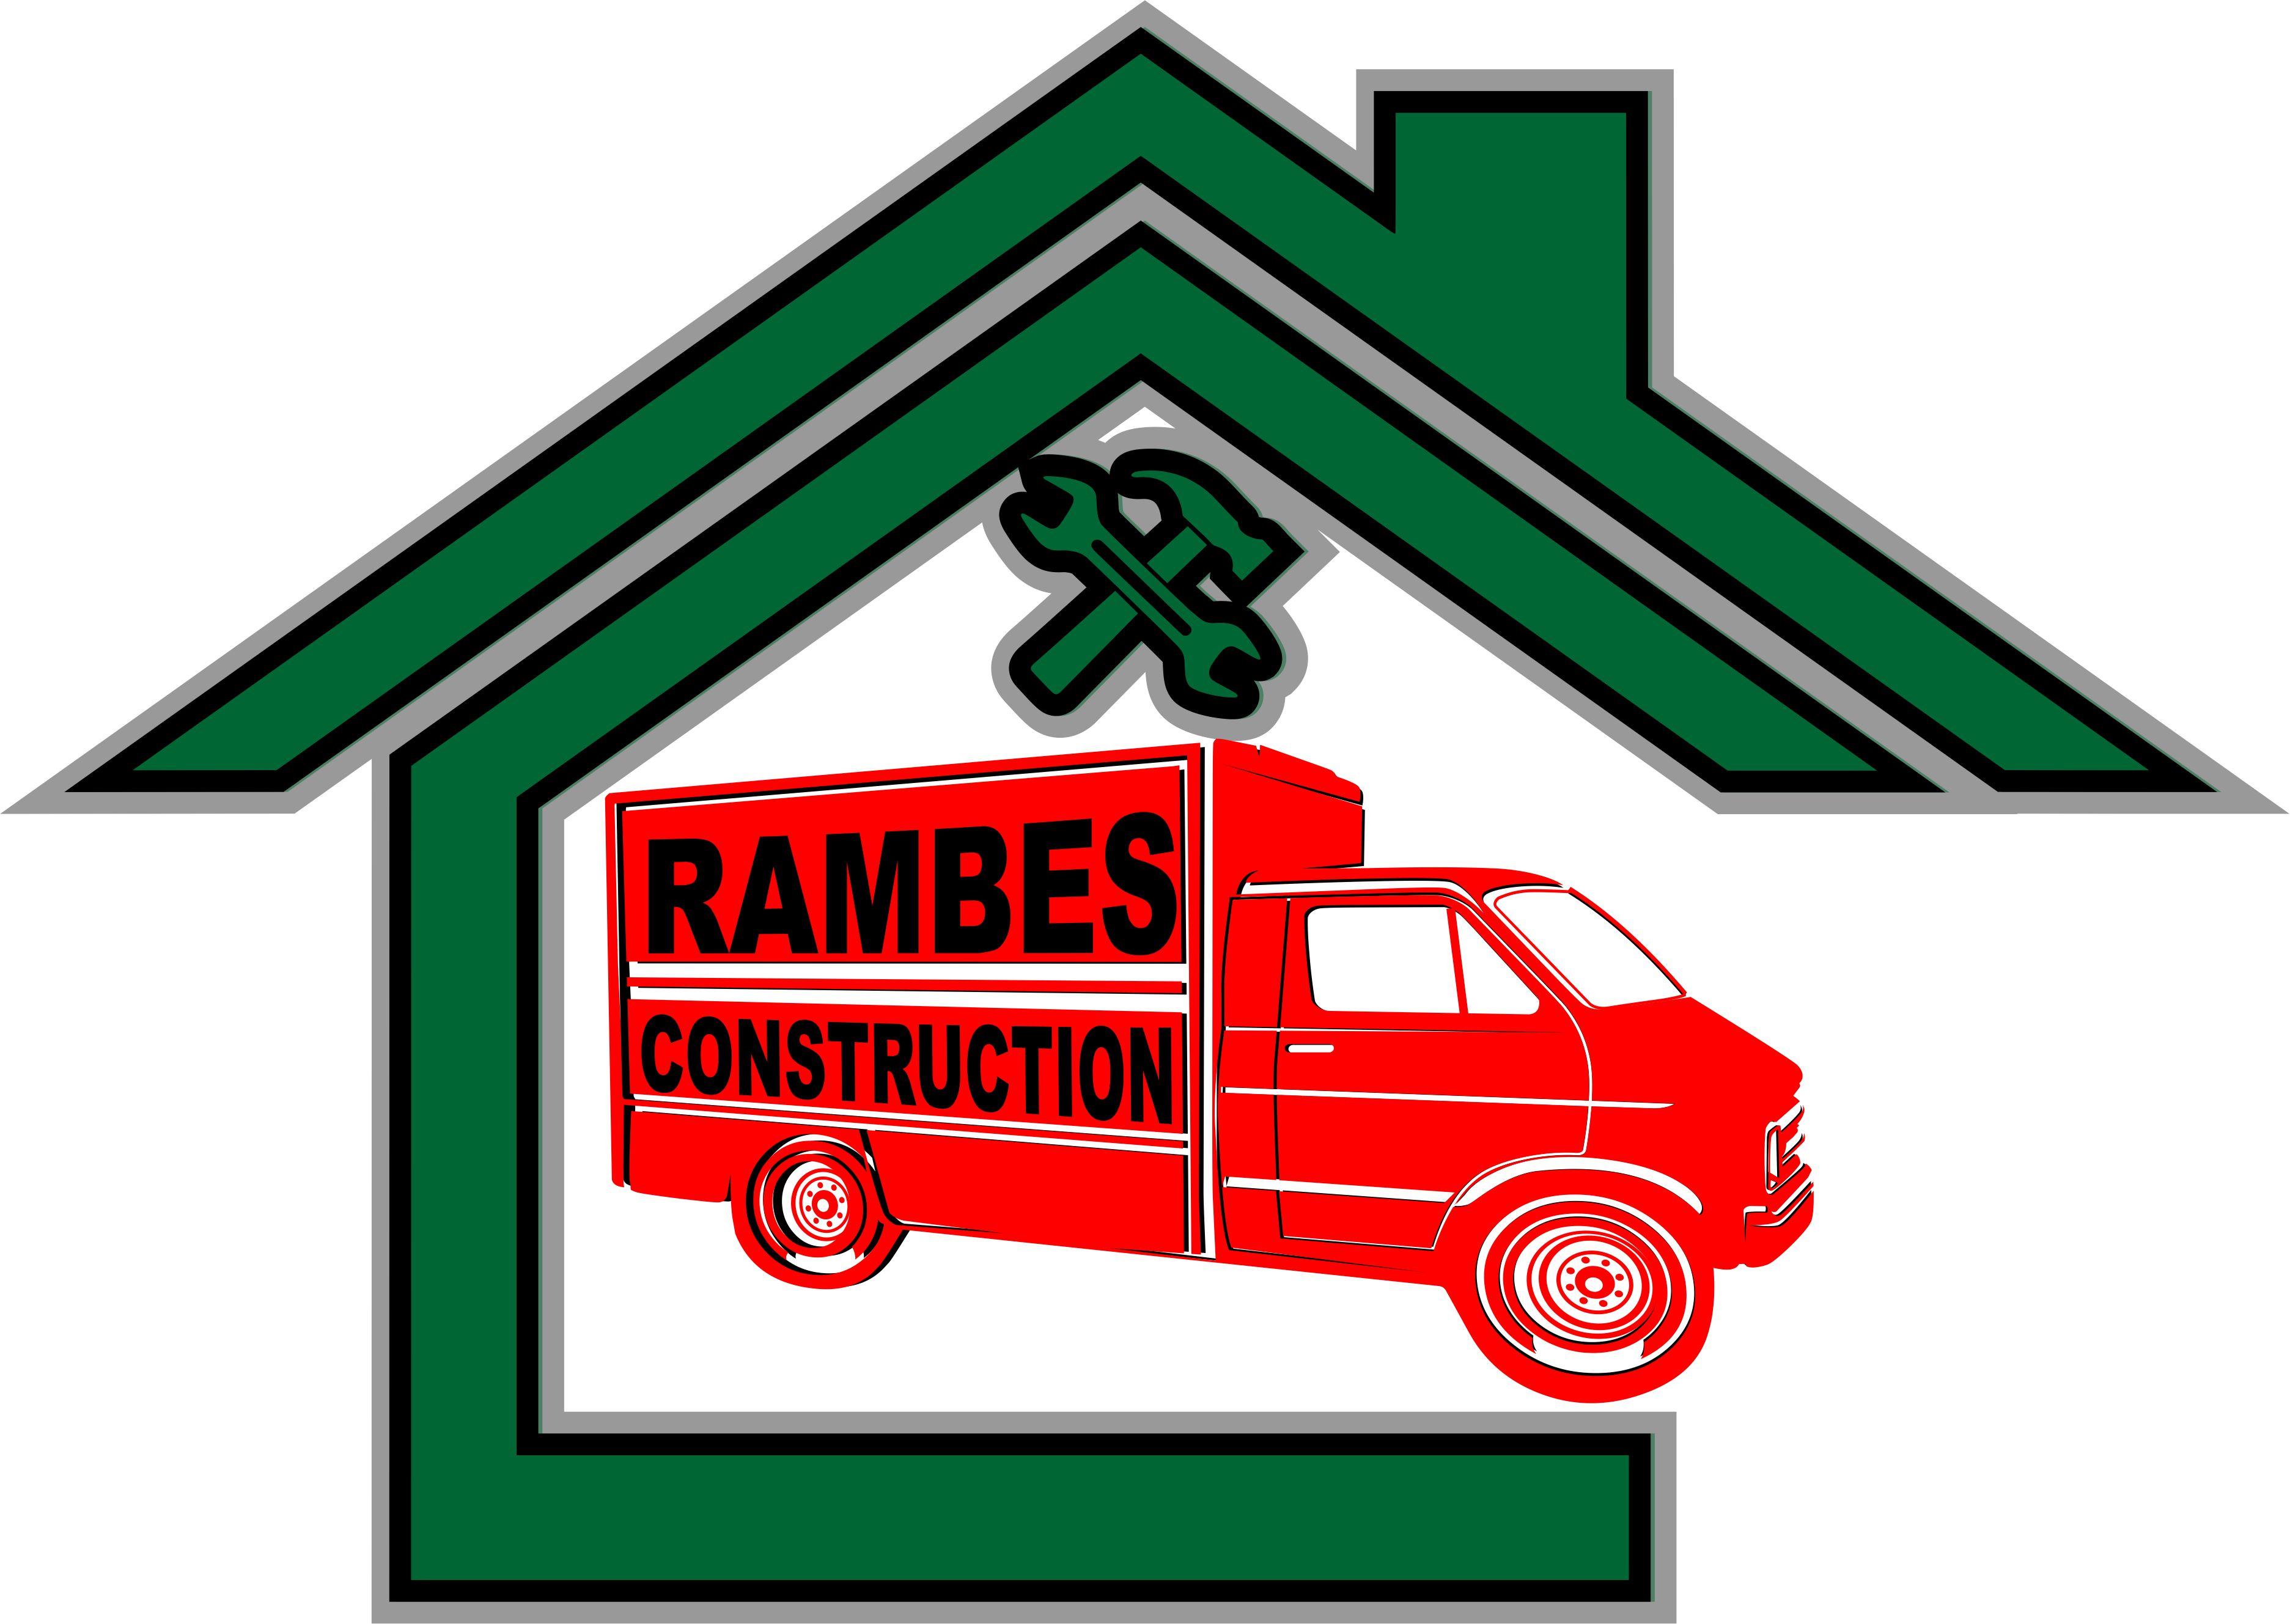 RAMBES CONSTRUCTION CORPORATION Logo